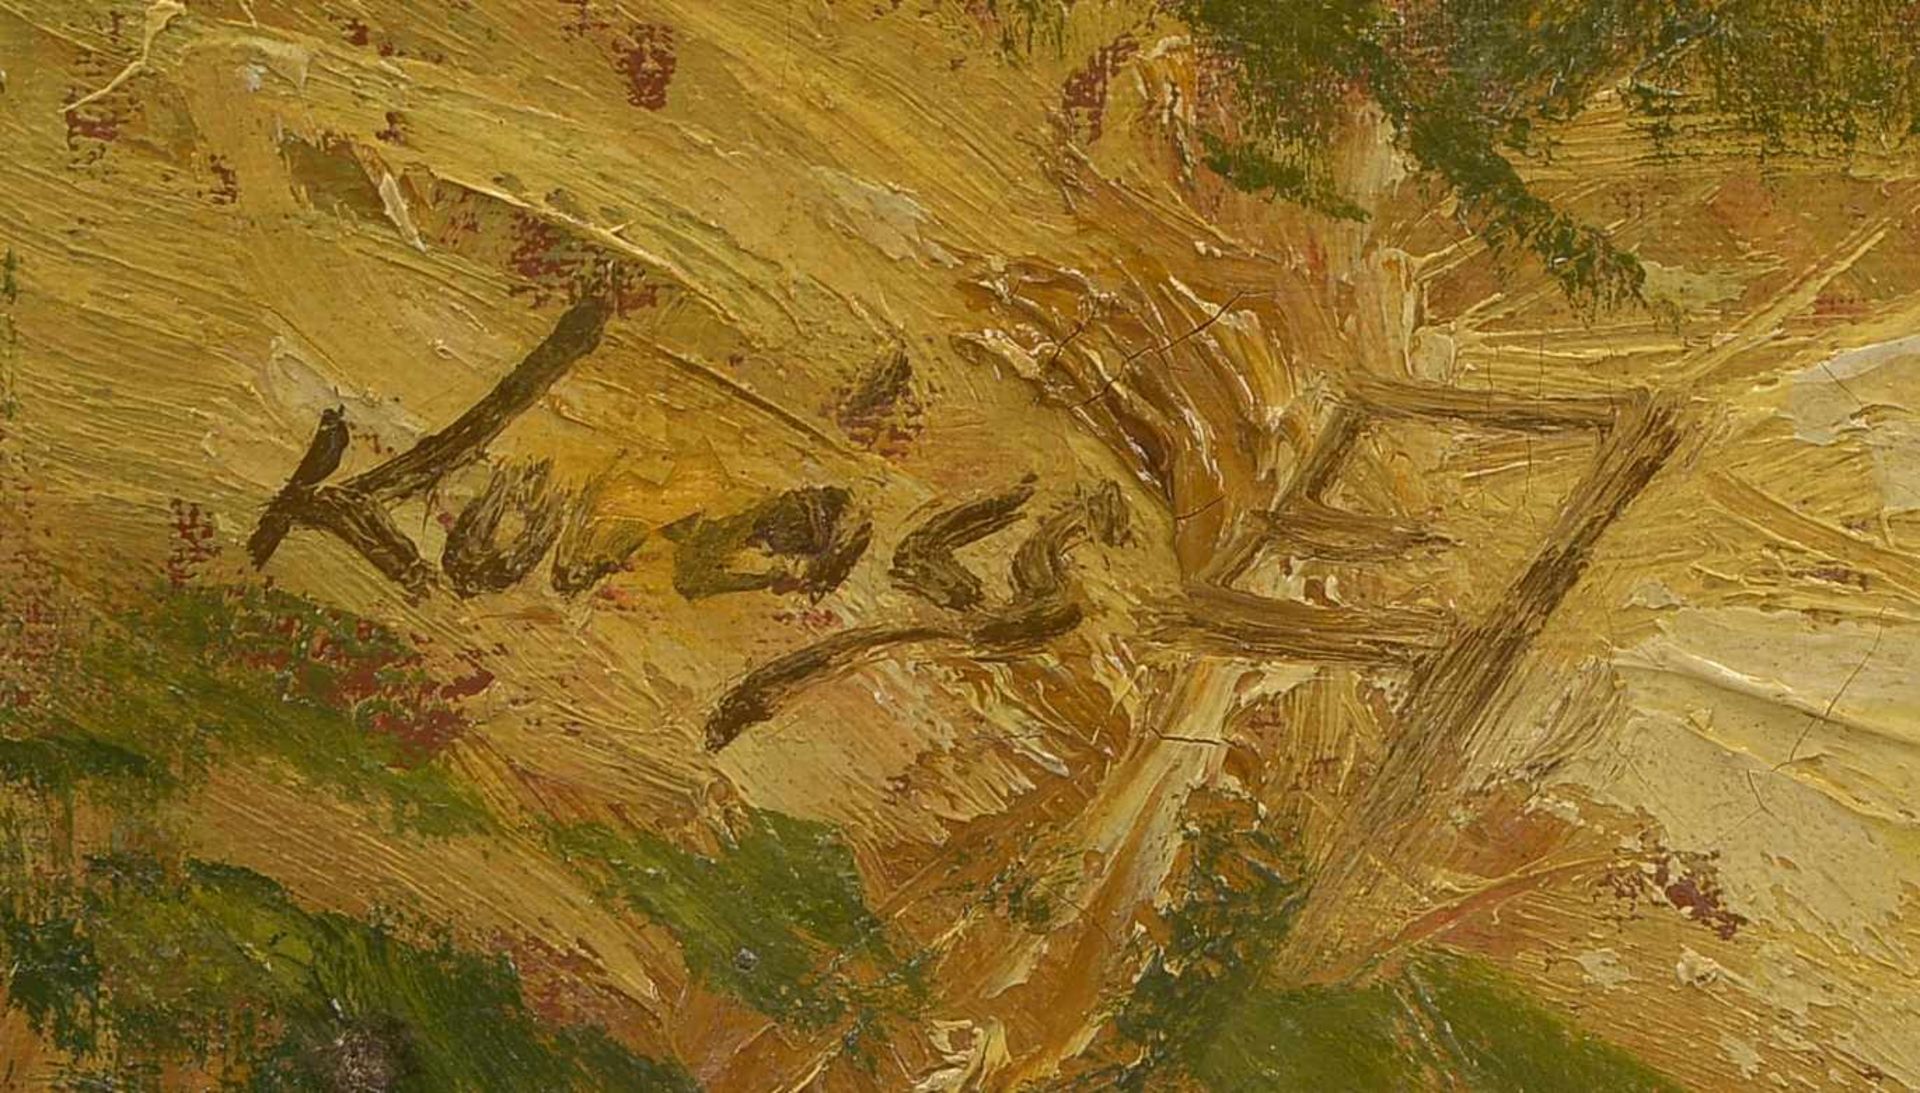 Kovacs, 'Ernte', Öl/Lw, unten links signiert; Bildmaße 50 x 70 cm, Rahmenmaße 64 x 84 cm - Bild 2 aus 2